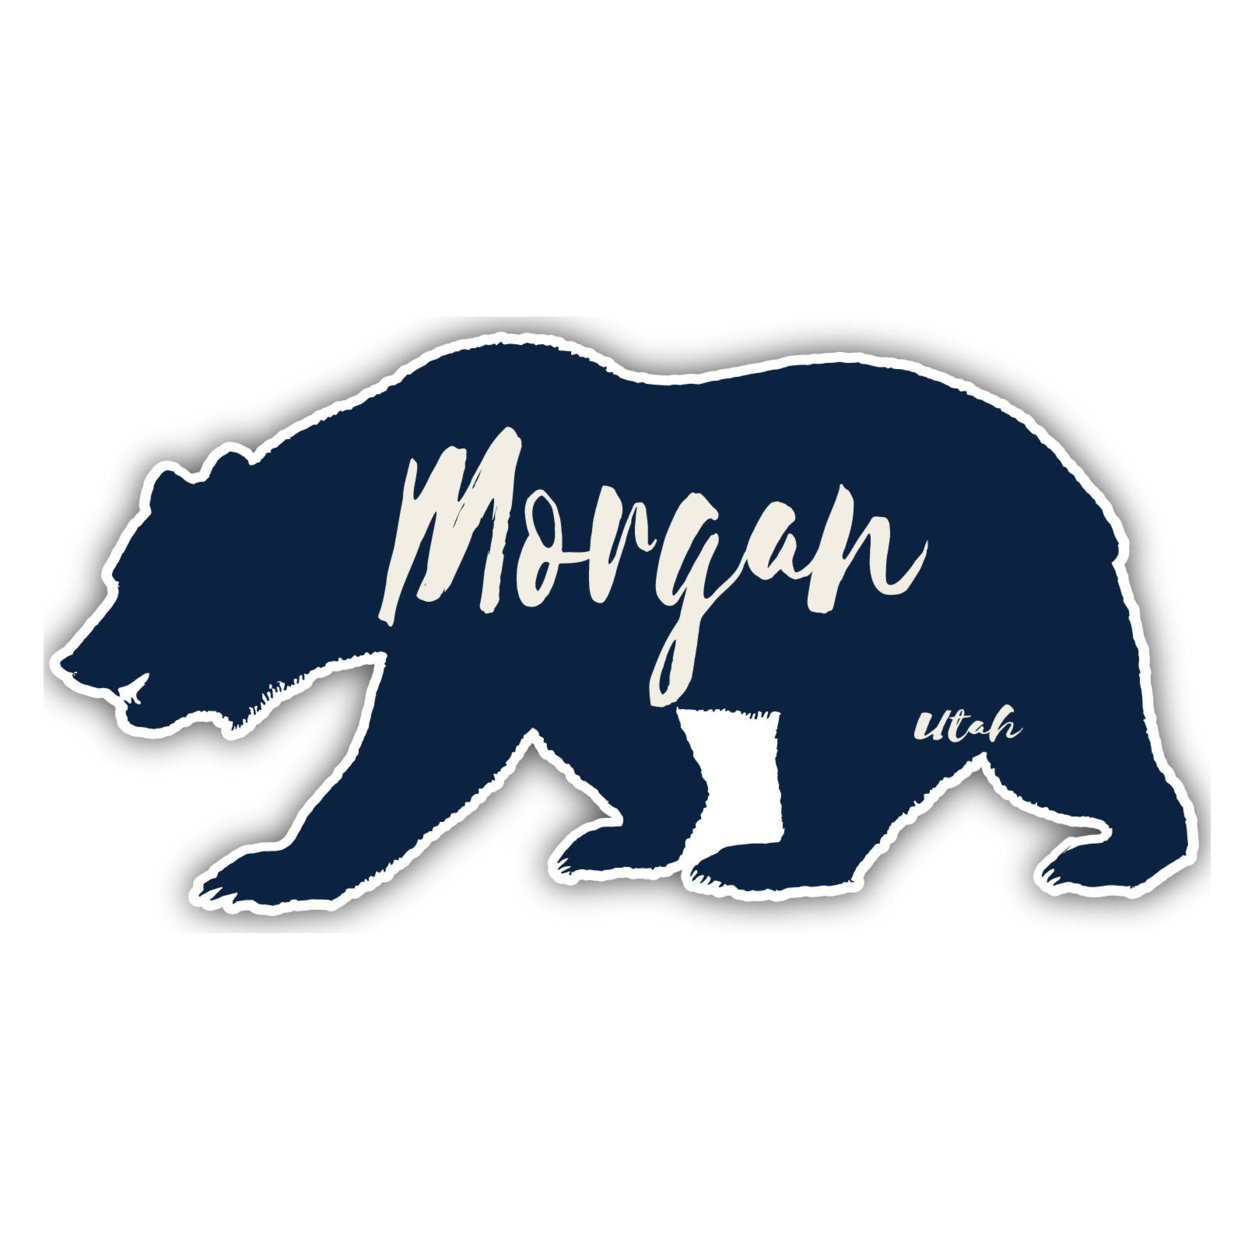 Morgan Utah Souvenir Decorative Stickers (Choose Theme And Size) - Single Unit, 2-Inch, Bear